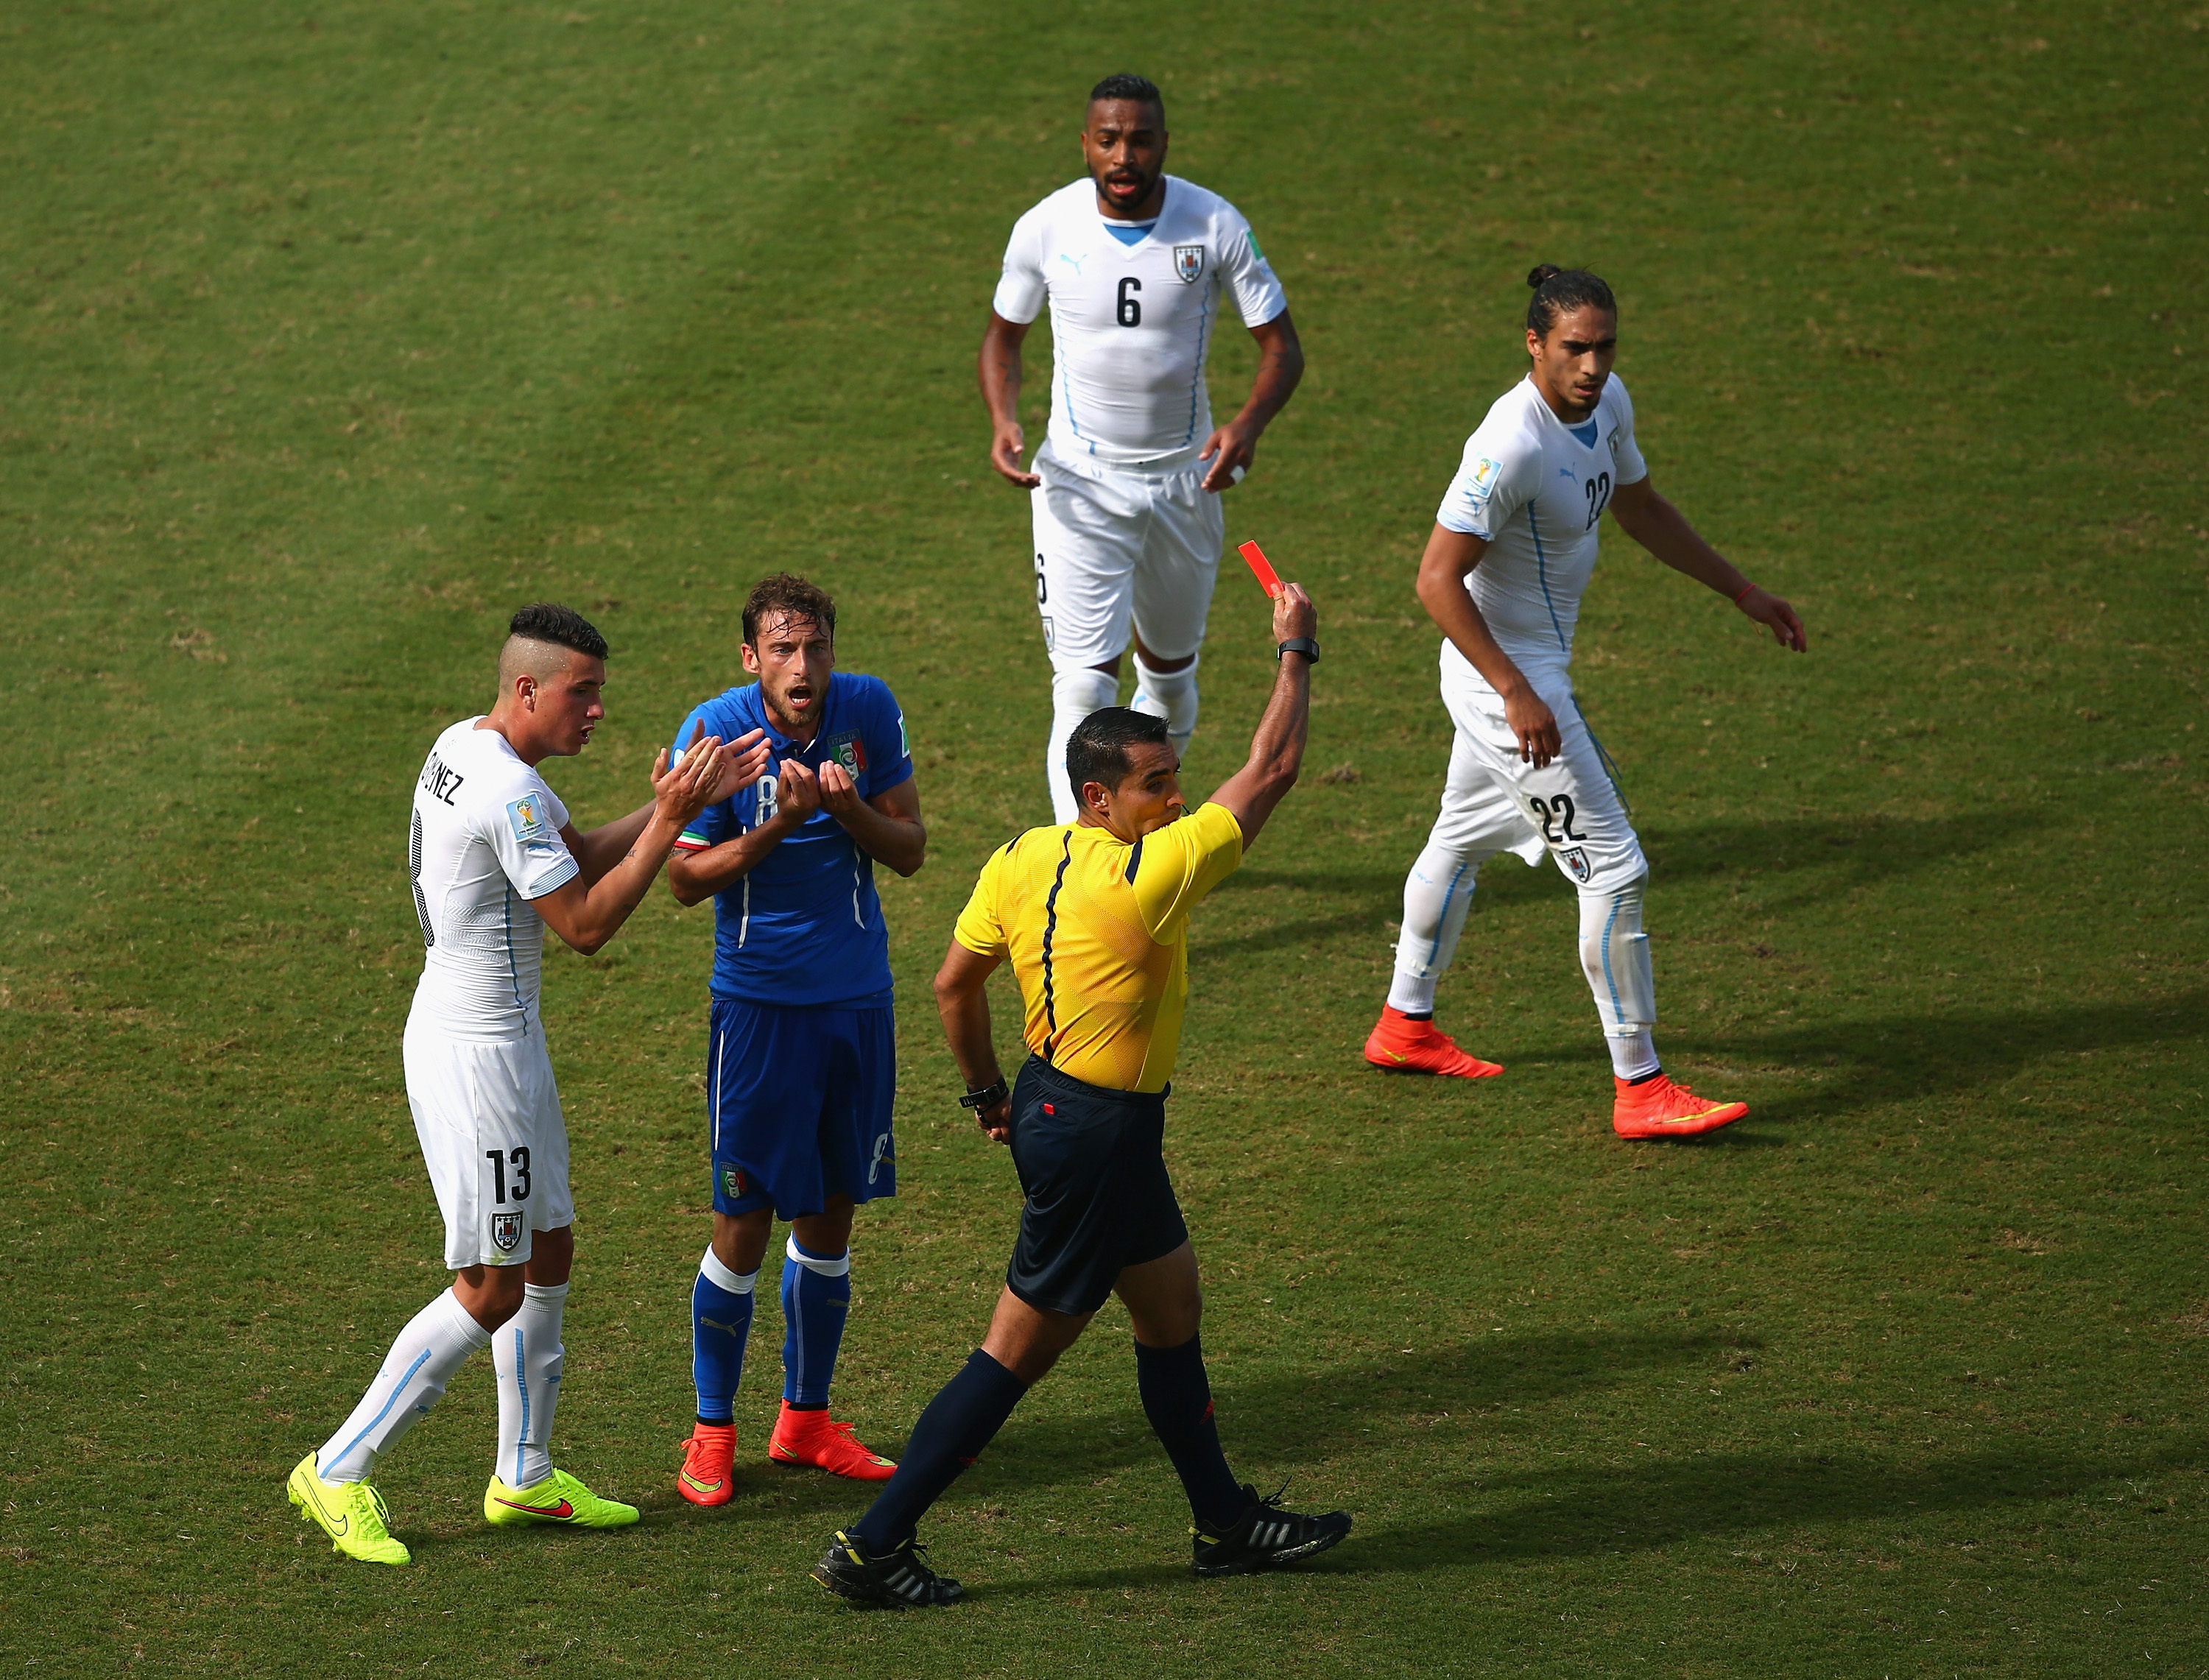 Italien gegen Uruguay: Nach Foul an Arevalo bekommt Claudio Marchisio eine harte Rote Karte (Video)